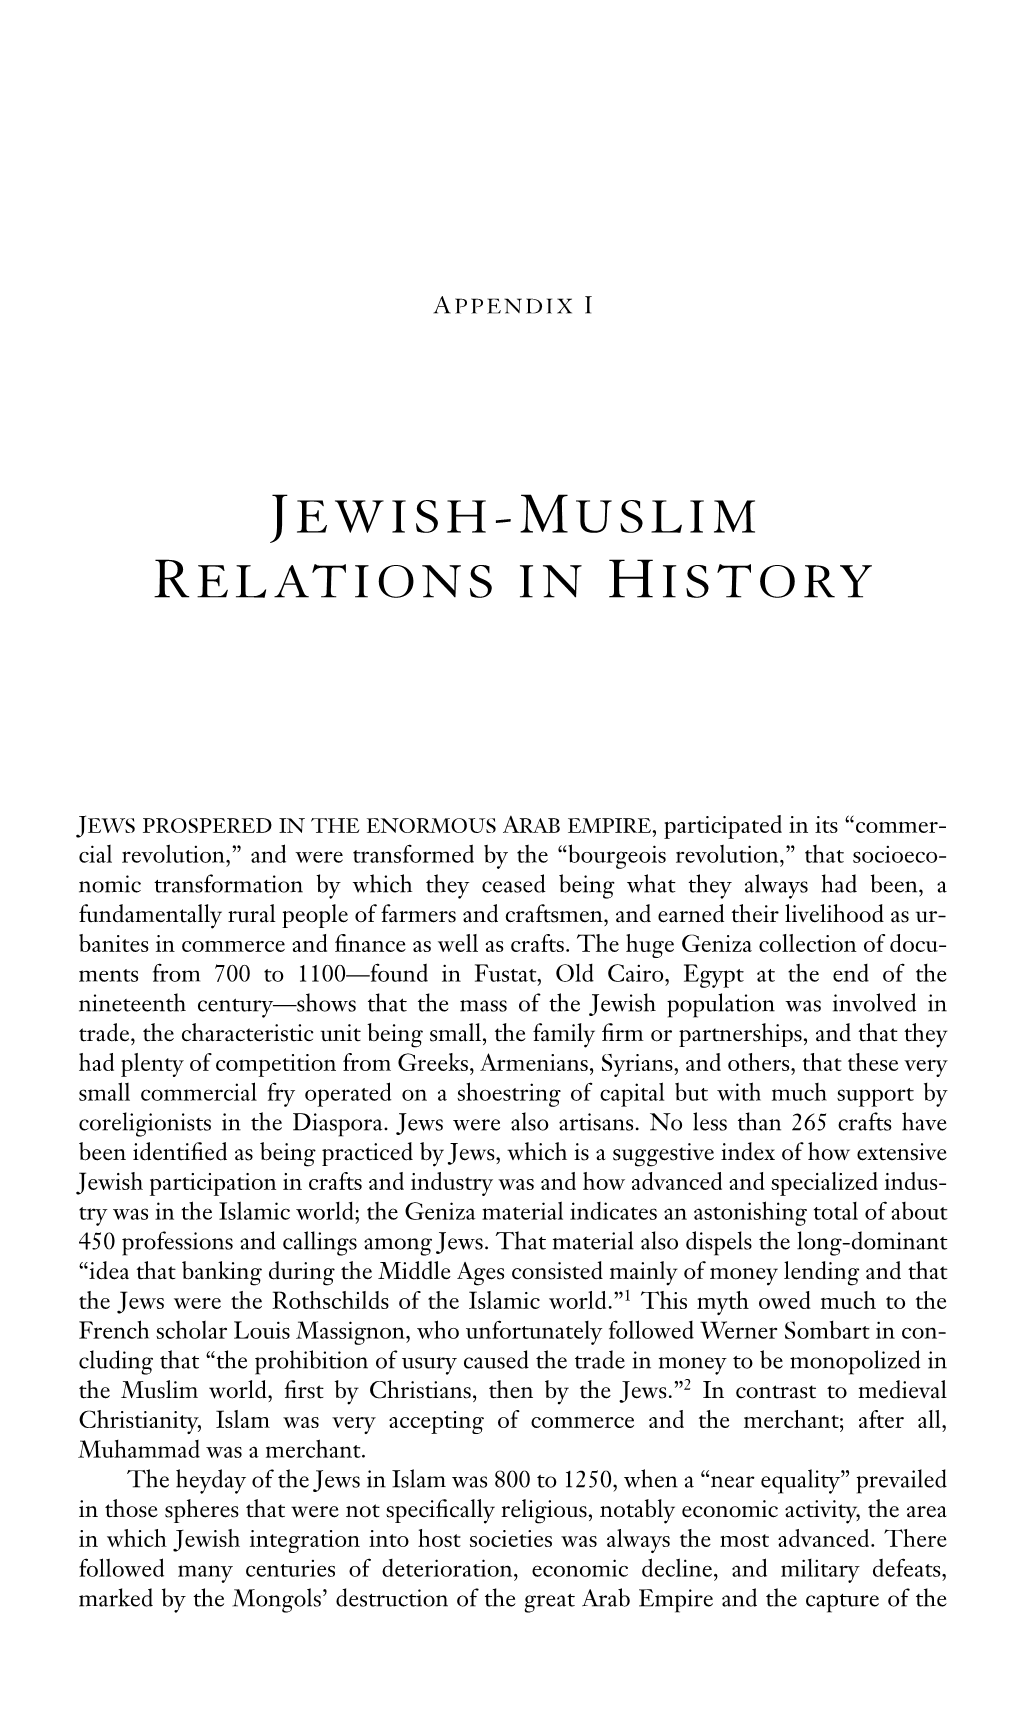 Jewish-Muslim Relations in History